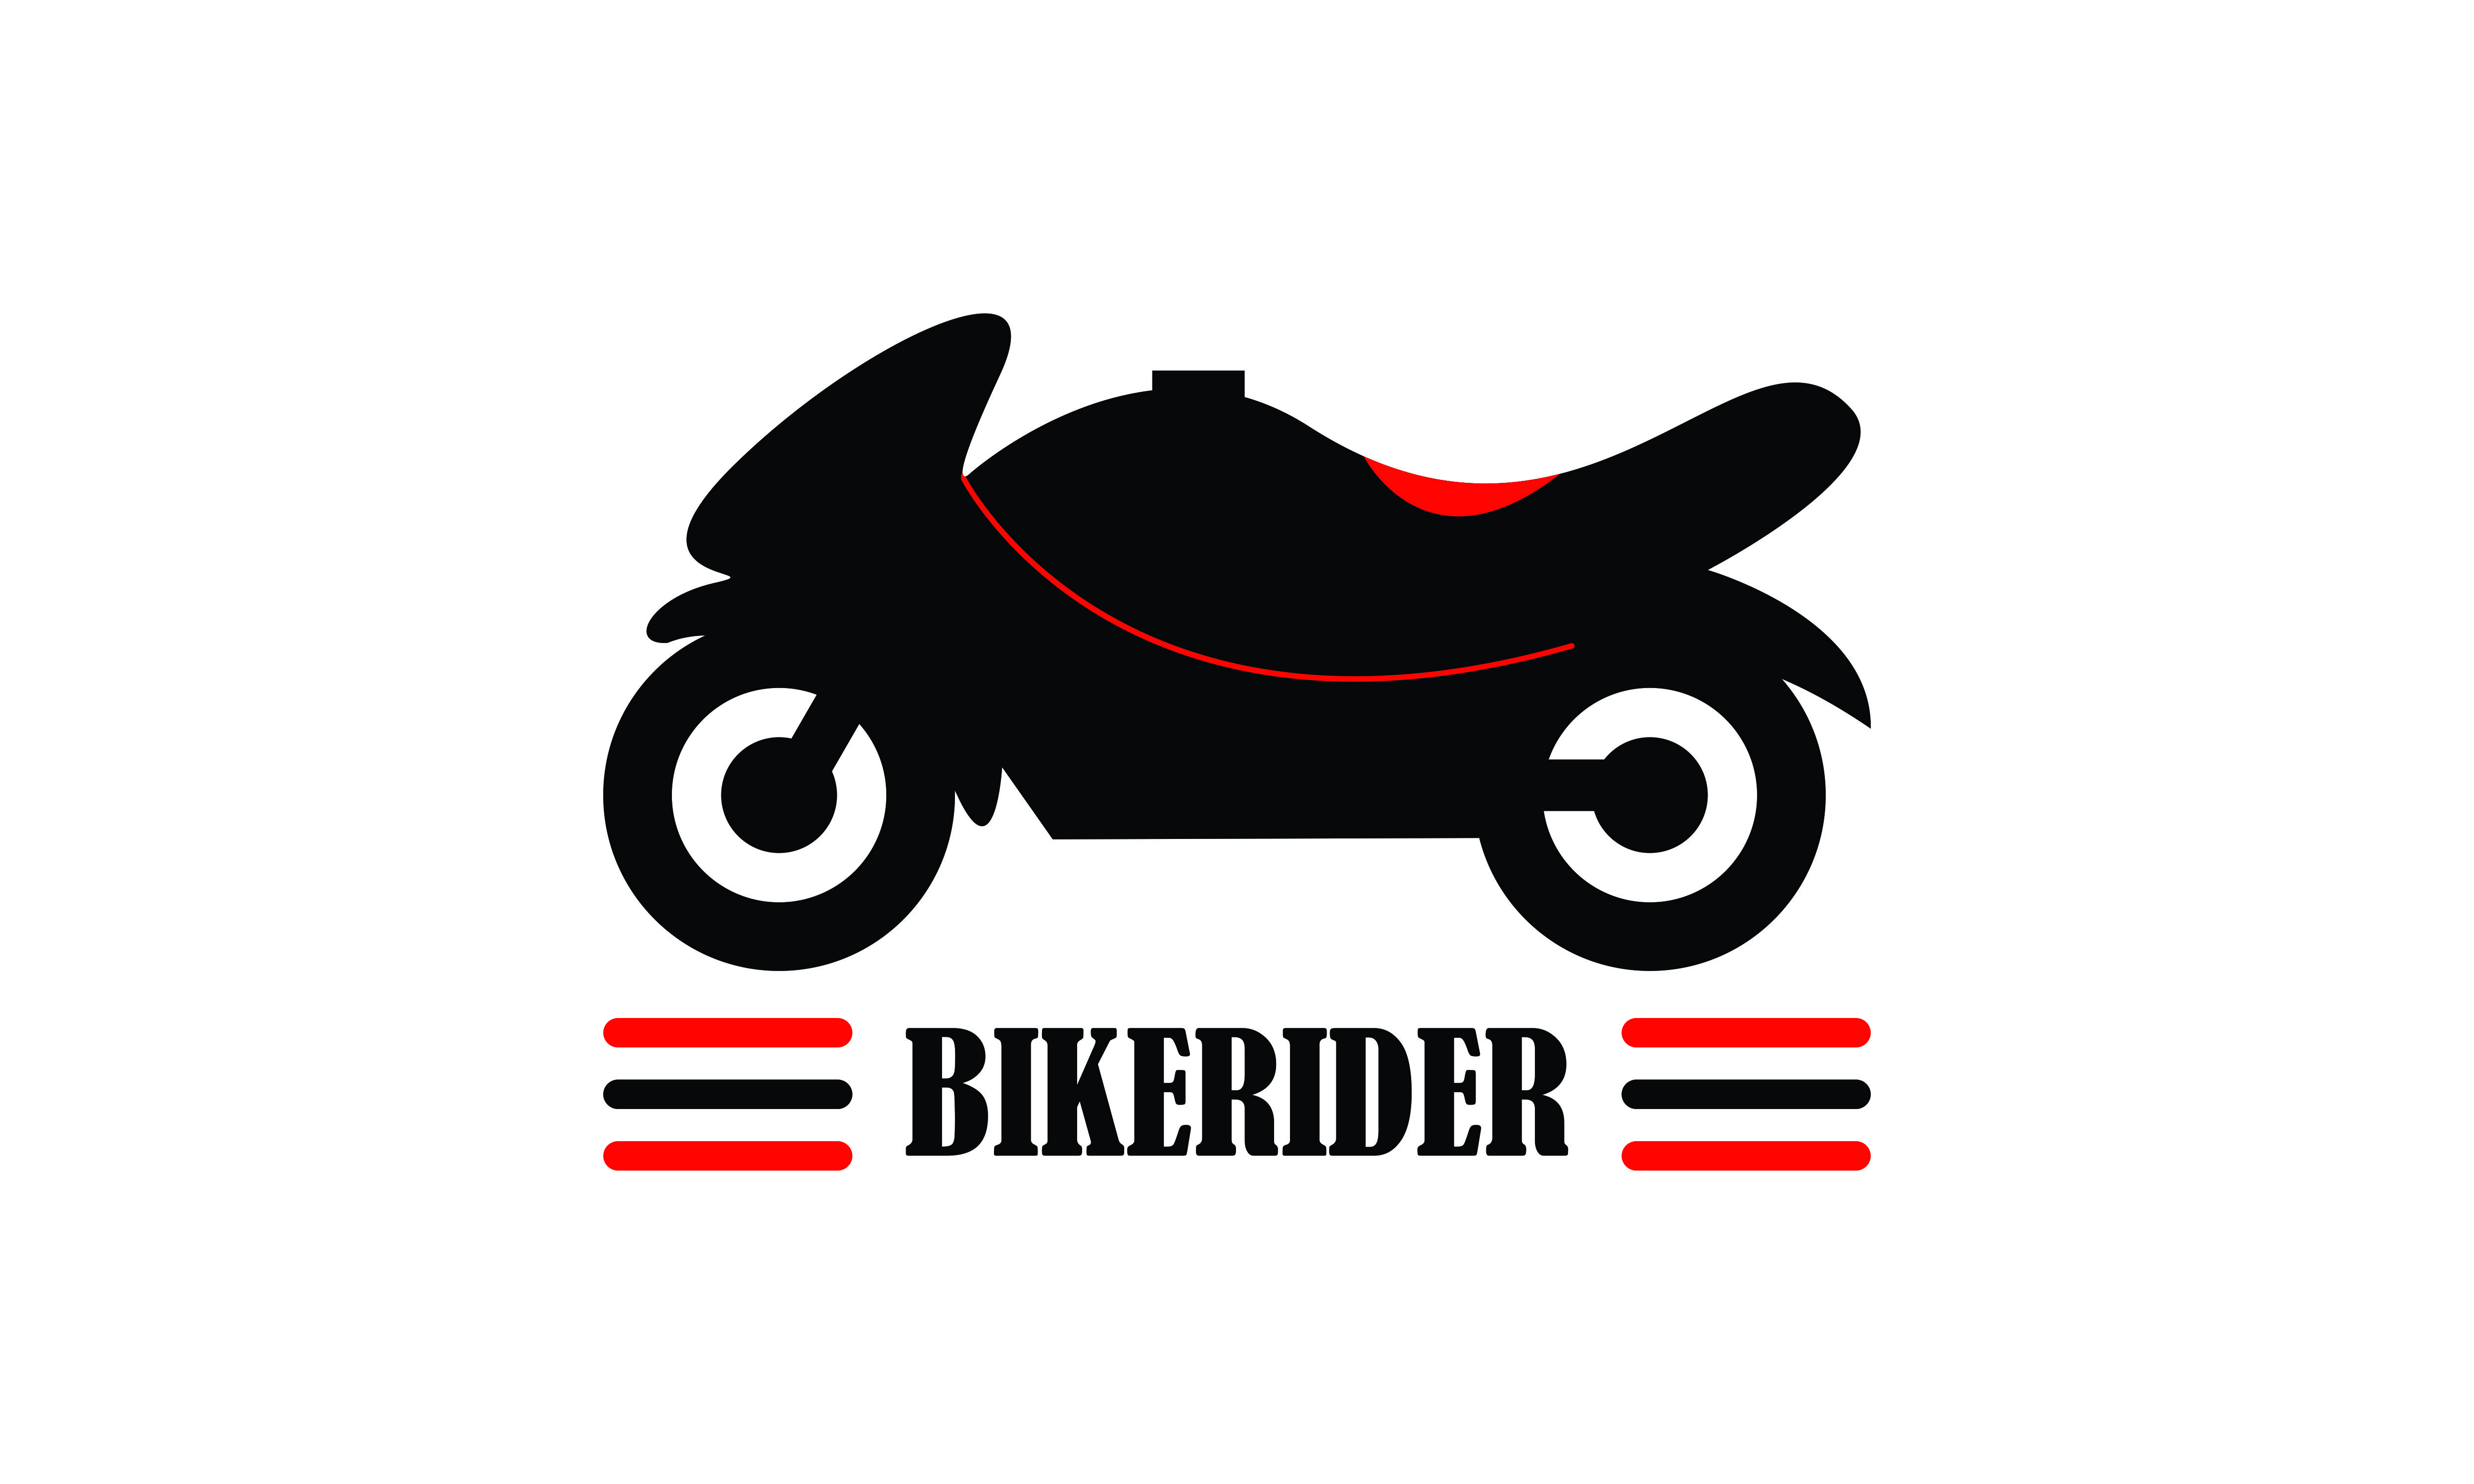 Bike rider logo Stock Photos, Royalty Free Bike rider logo Images |  Depositphotos